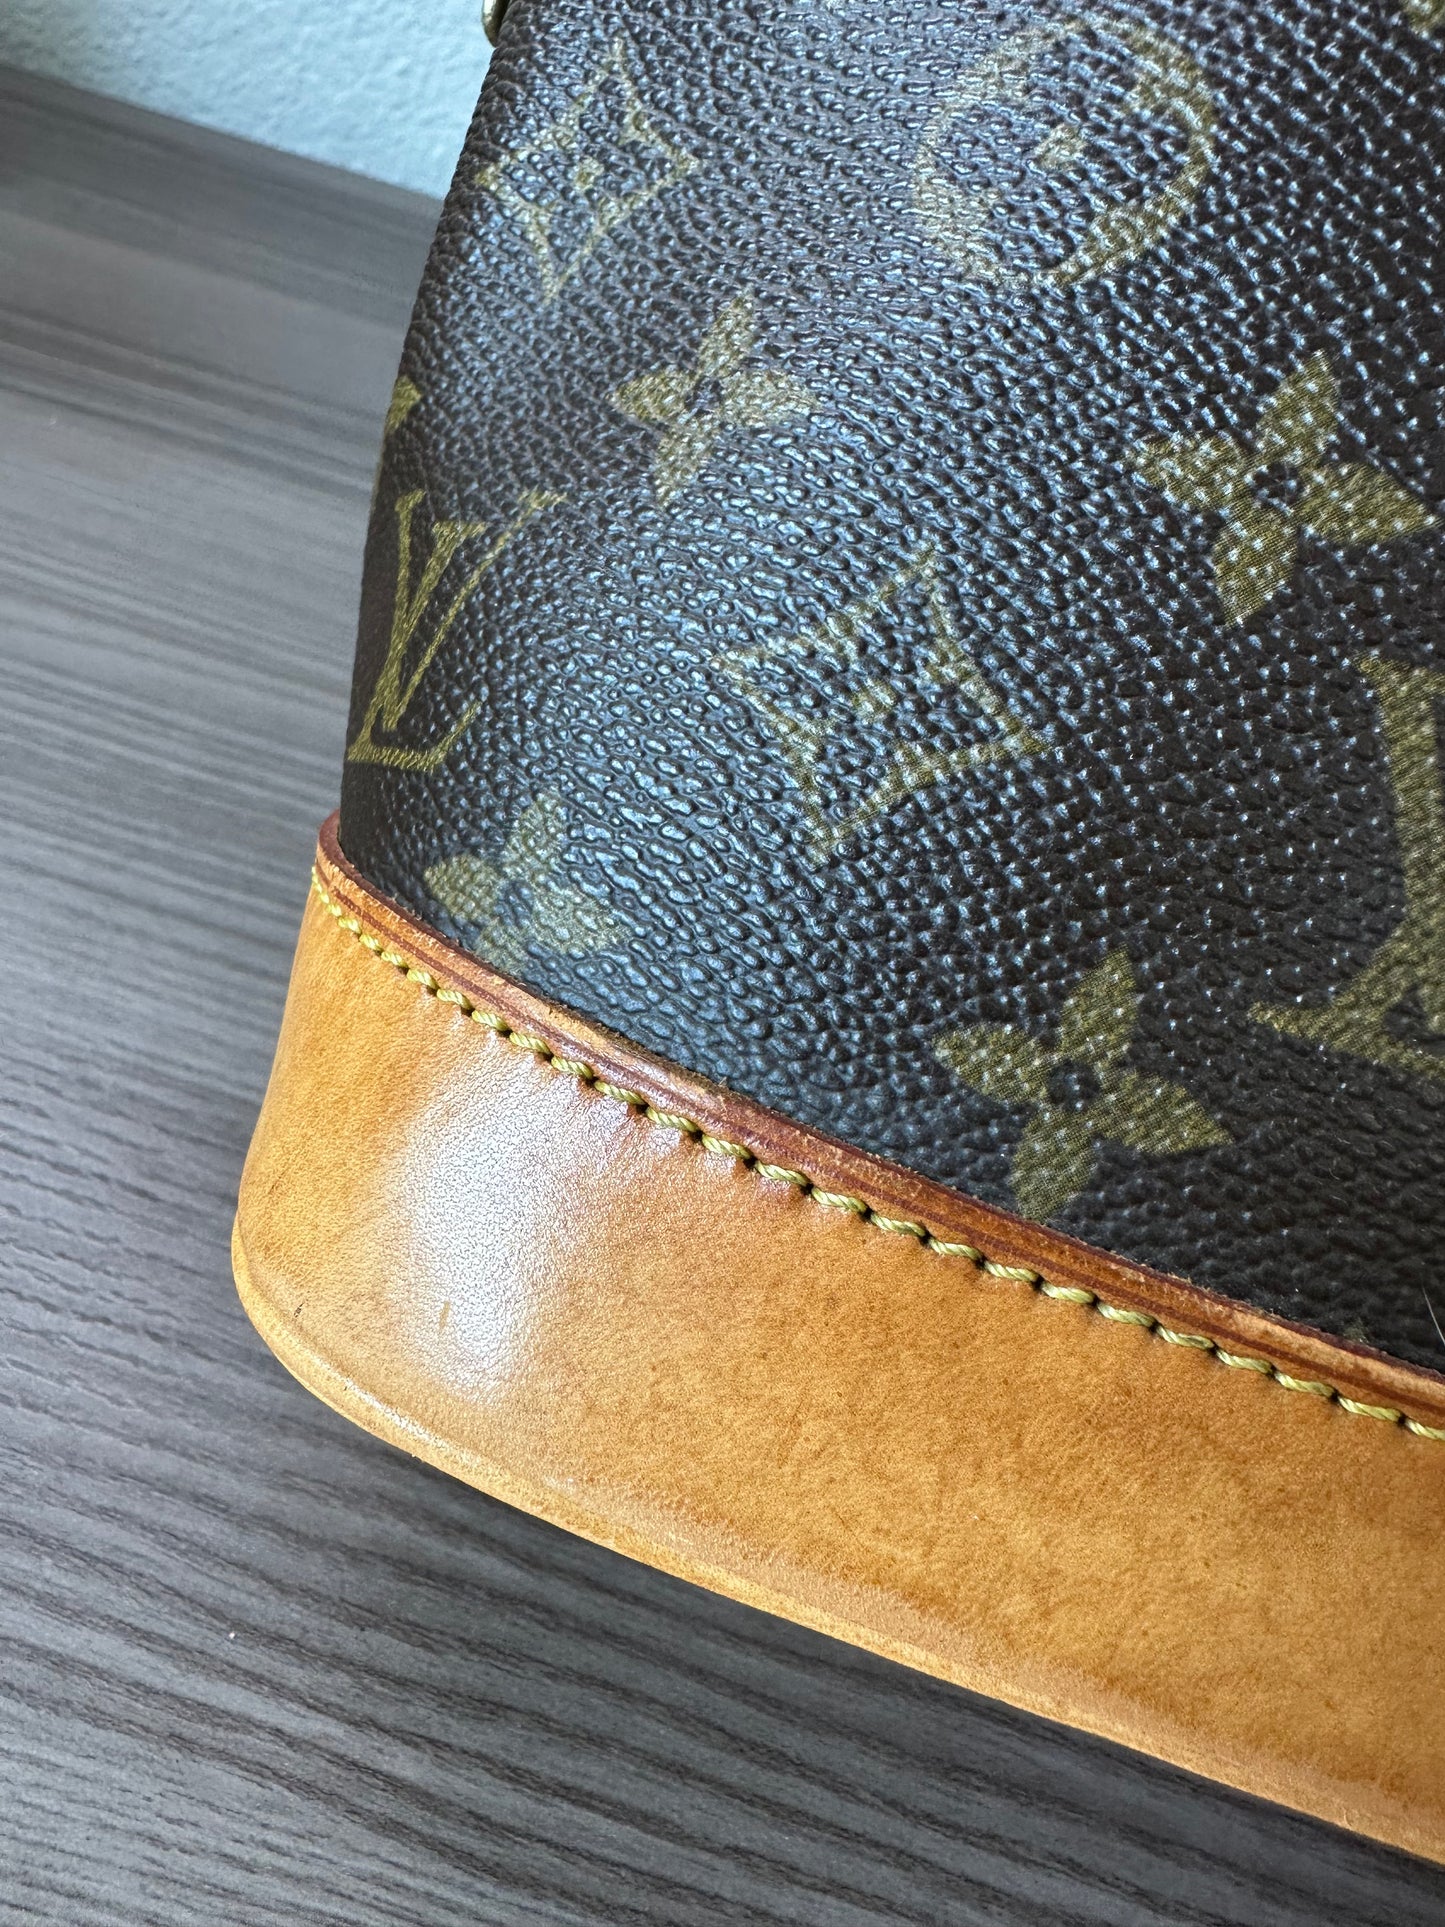 Pre-owned Authentic Louis Vuitton Alma PM Monogram Handbag